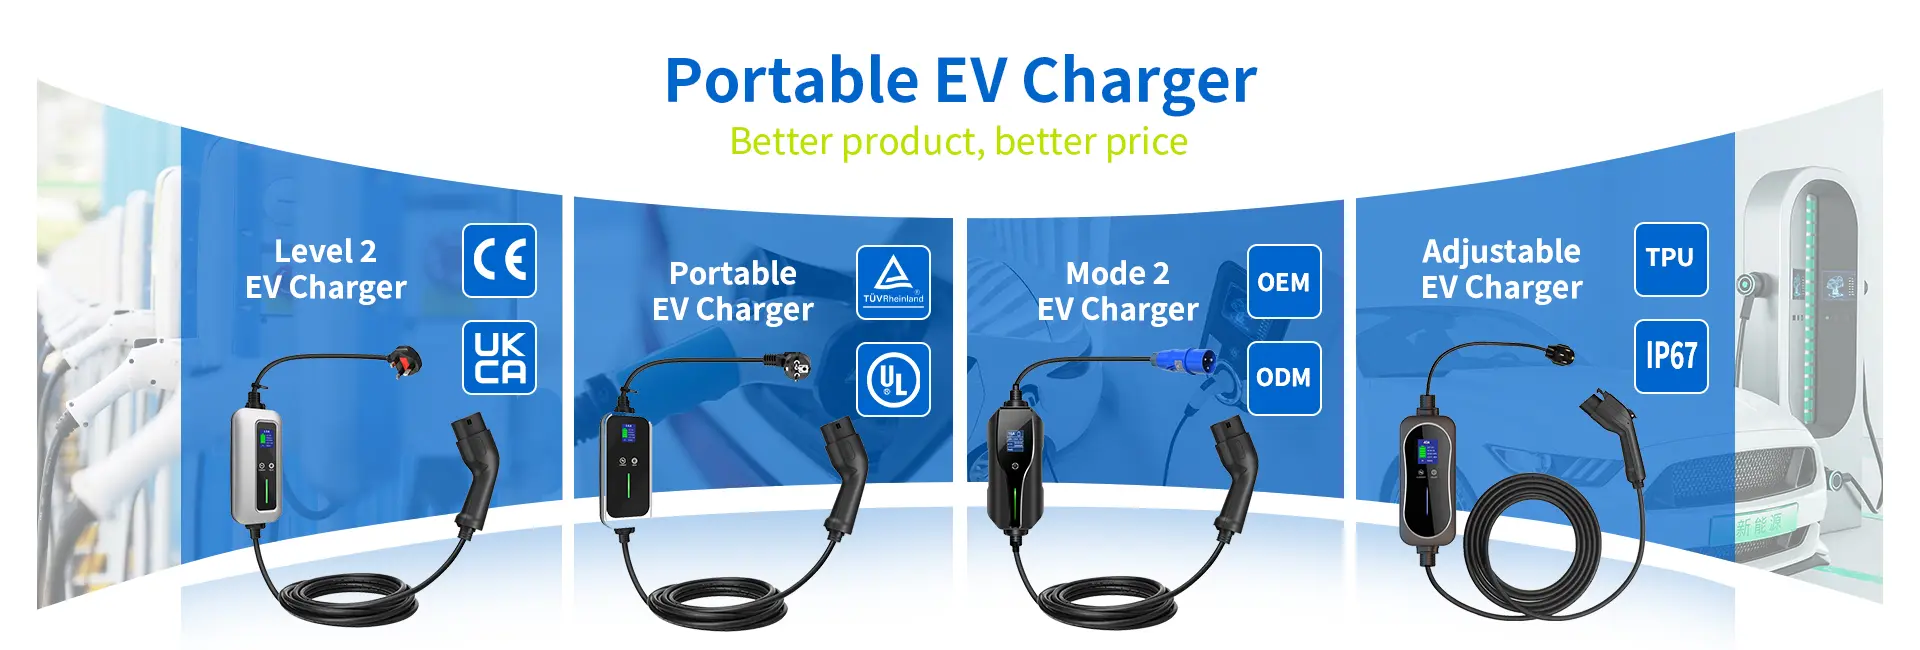 https://www.midaevse.com/3phase-portable-ev-charger/